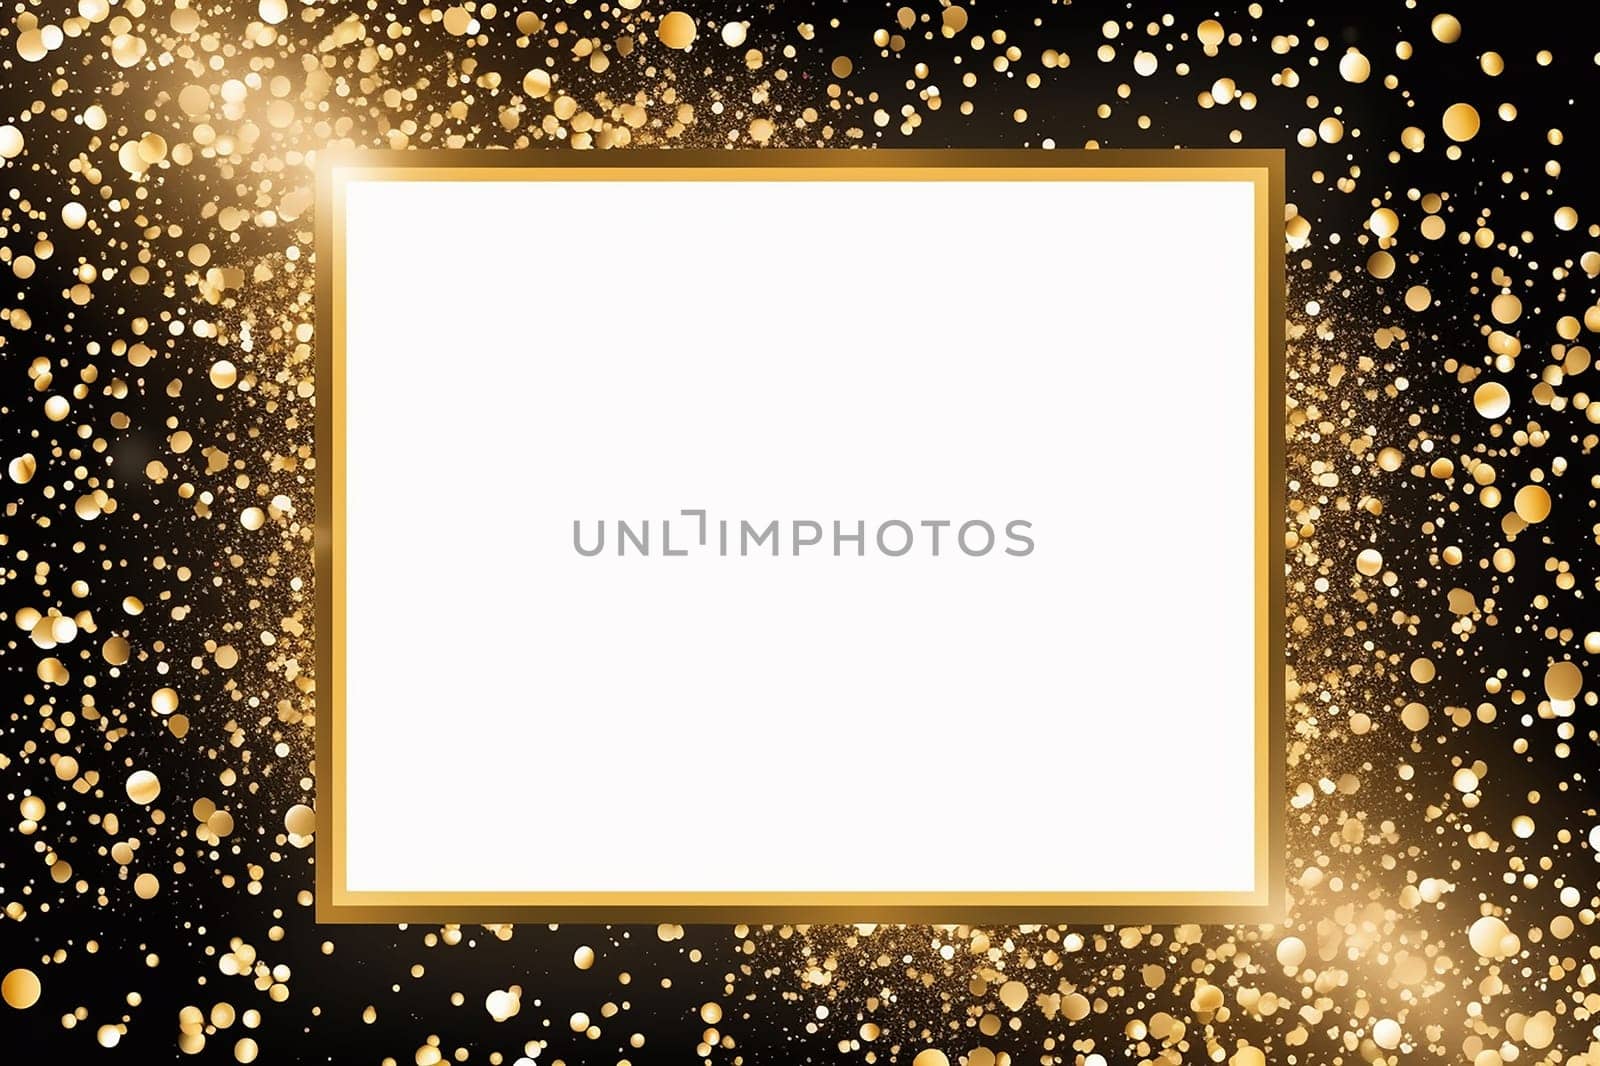 Elegant golden frame on a black background with sparkling golden particles scattered around.